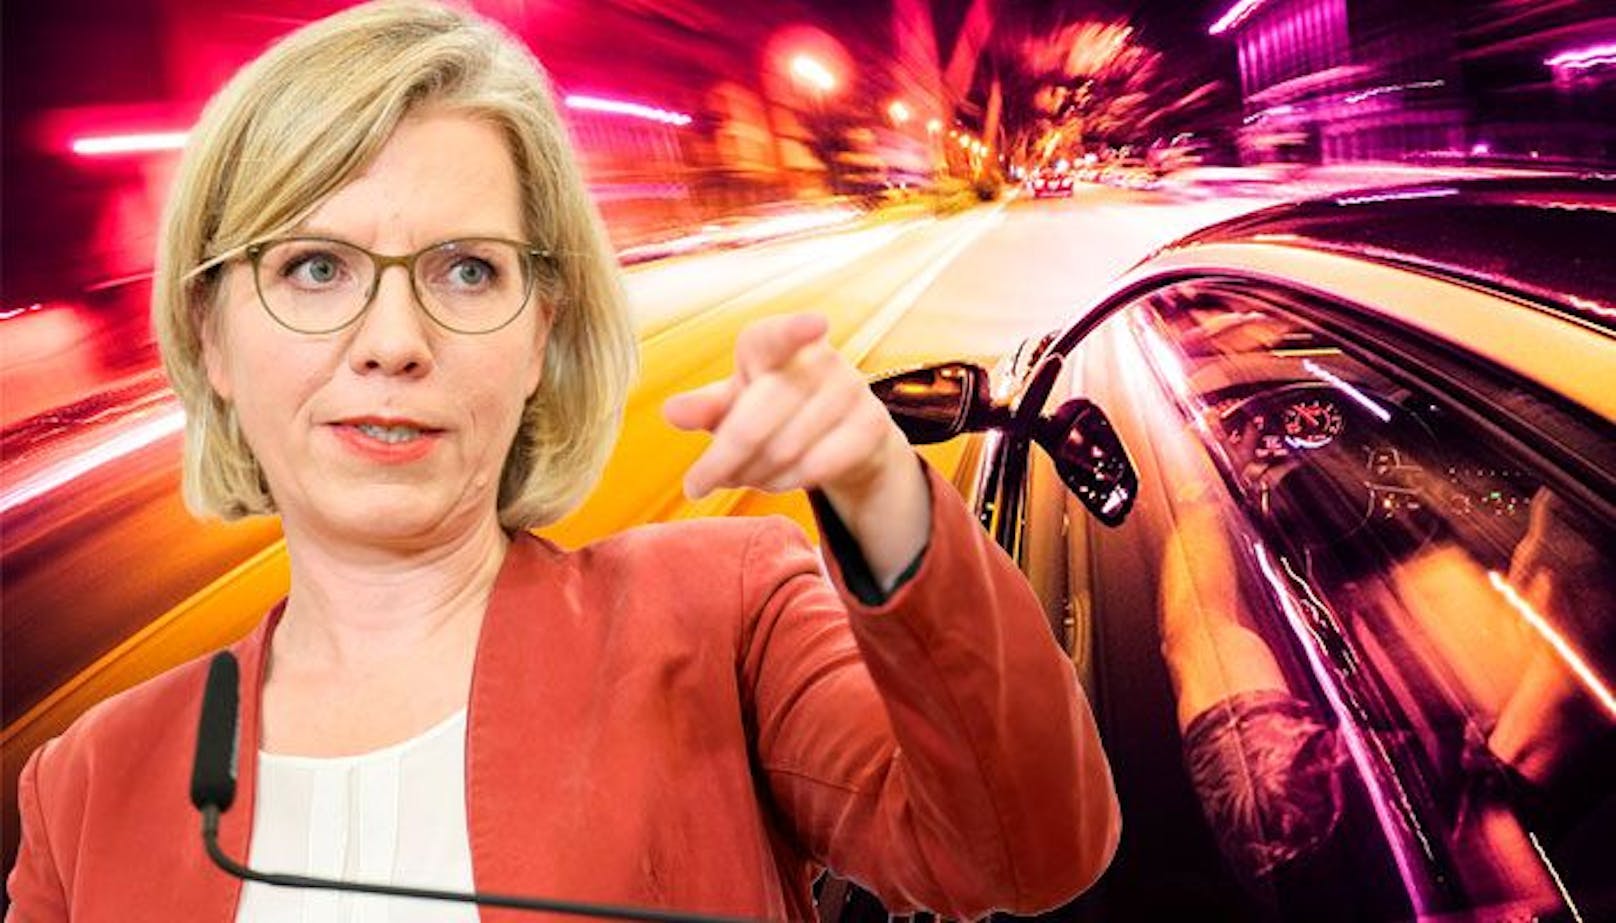 Verkehrsministerin Leonore Gewessler will Roadrunnern künftig das Auto wegnehmen – <a target="_blank" data-li-document-ref="100242418" href="https://www.heute.at/g/ministerin-gewessler-will-rasern-jetzt-auto-wegnehmen-100242418">Weiterlesen &gt;&gt;&gt;</a>